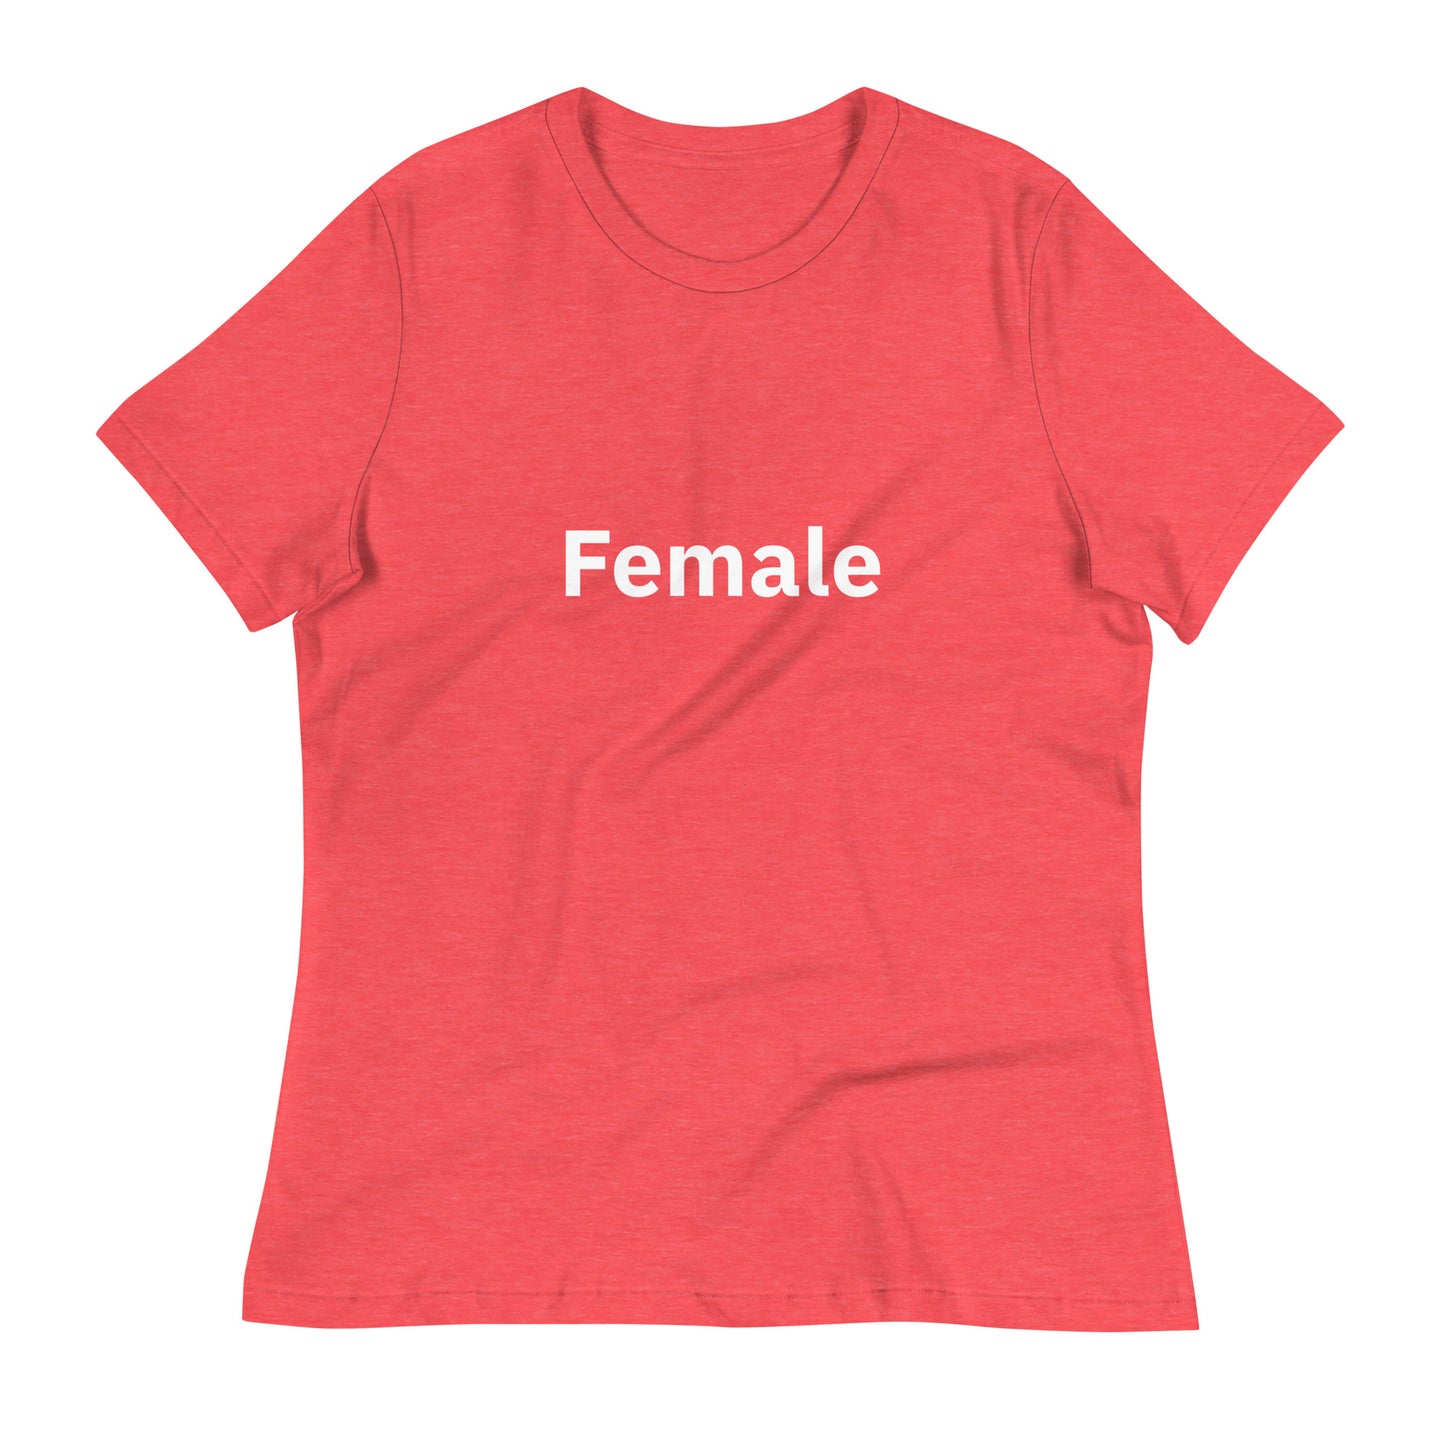 Female t-shirt